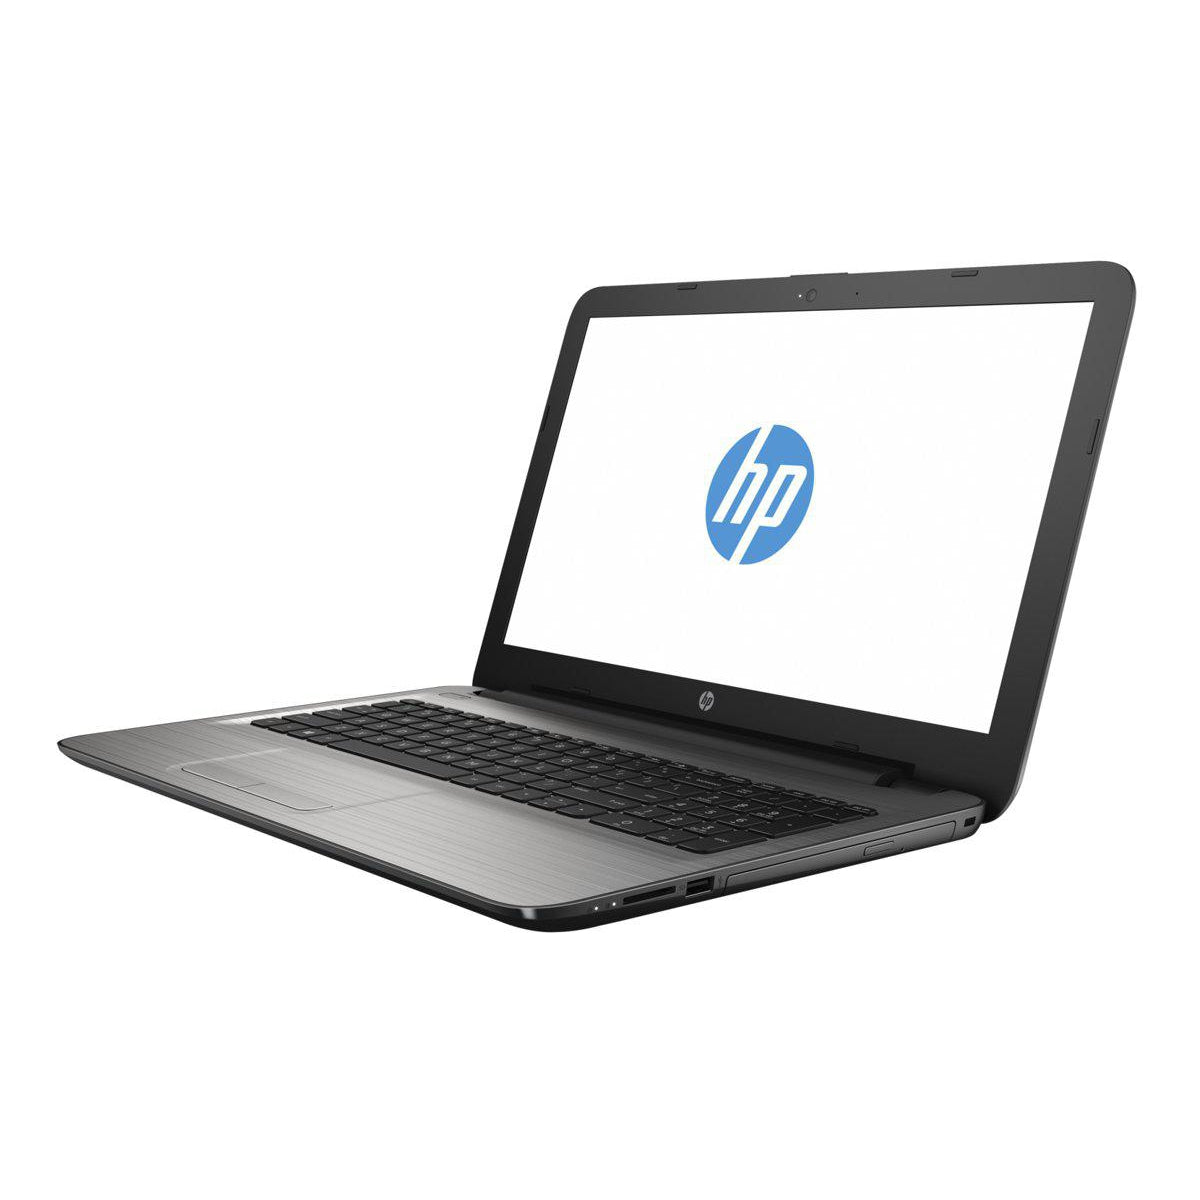 HP 15-ay167sa 15.6" Laptop, Intel Core I5-7200U, 8GB Ram, 1TB HDD, Z3C95EA#ABU, Silver